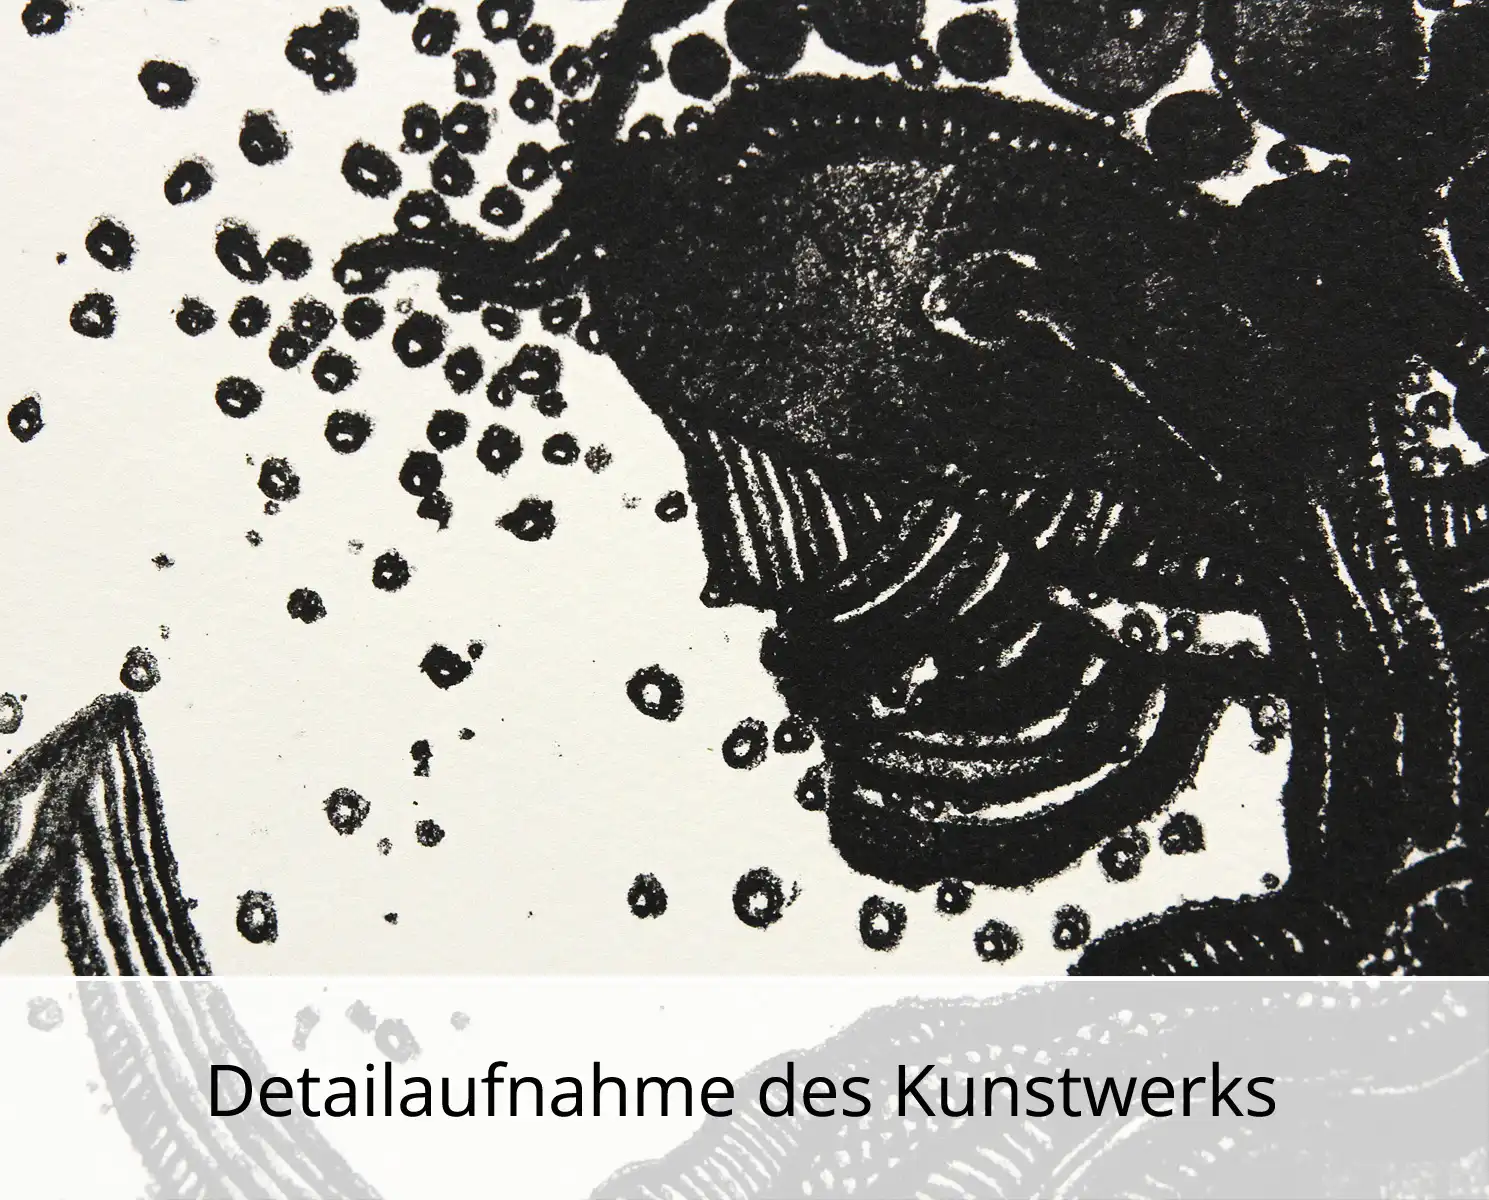 C. Blechschmidt: "Pure Vernunft darf niemals siegen", Originale Grafik/Lithographie